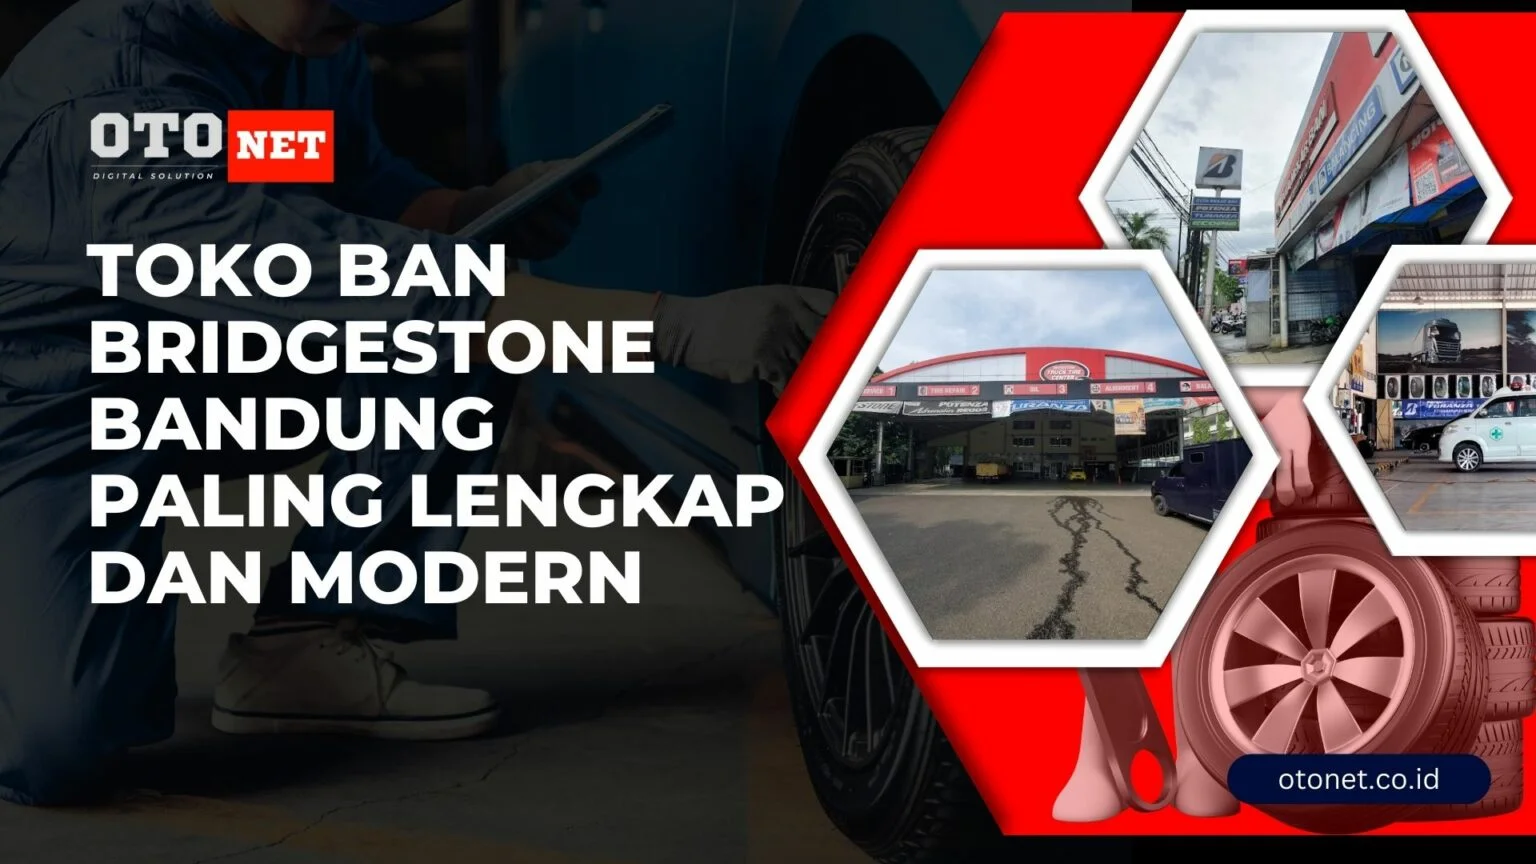 Toko Ban Bridgestone Bandung